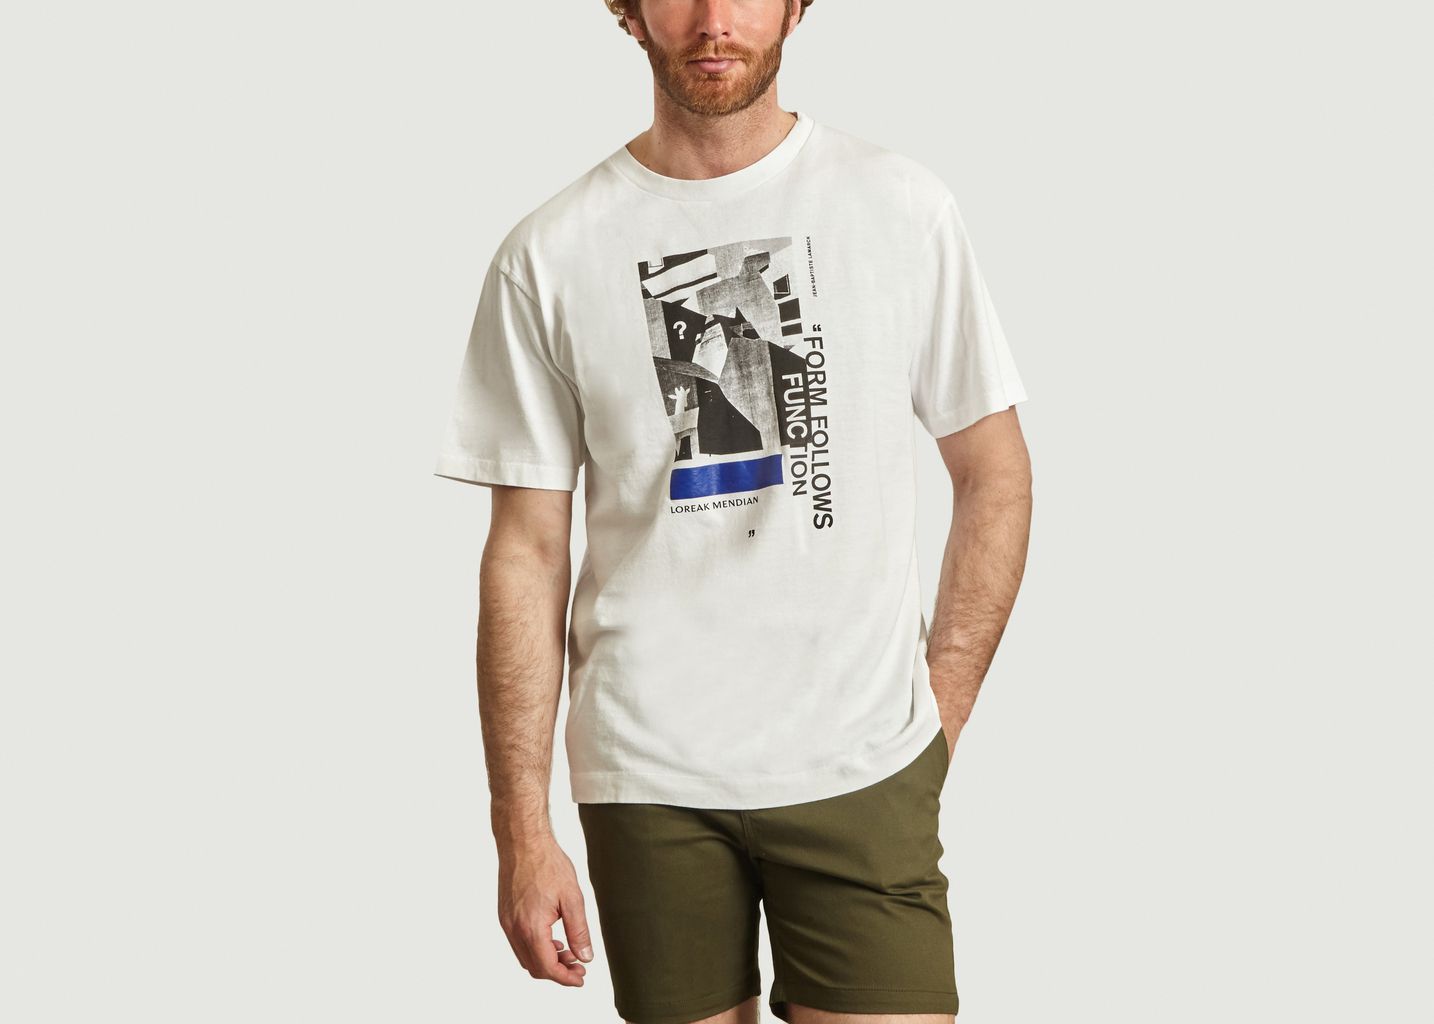 Fol Jean-Baptiste Lamarck printed t-shirt - Loreak Mendian